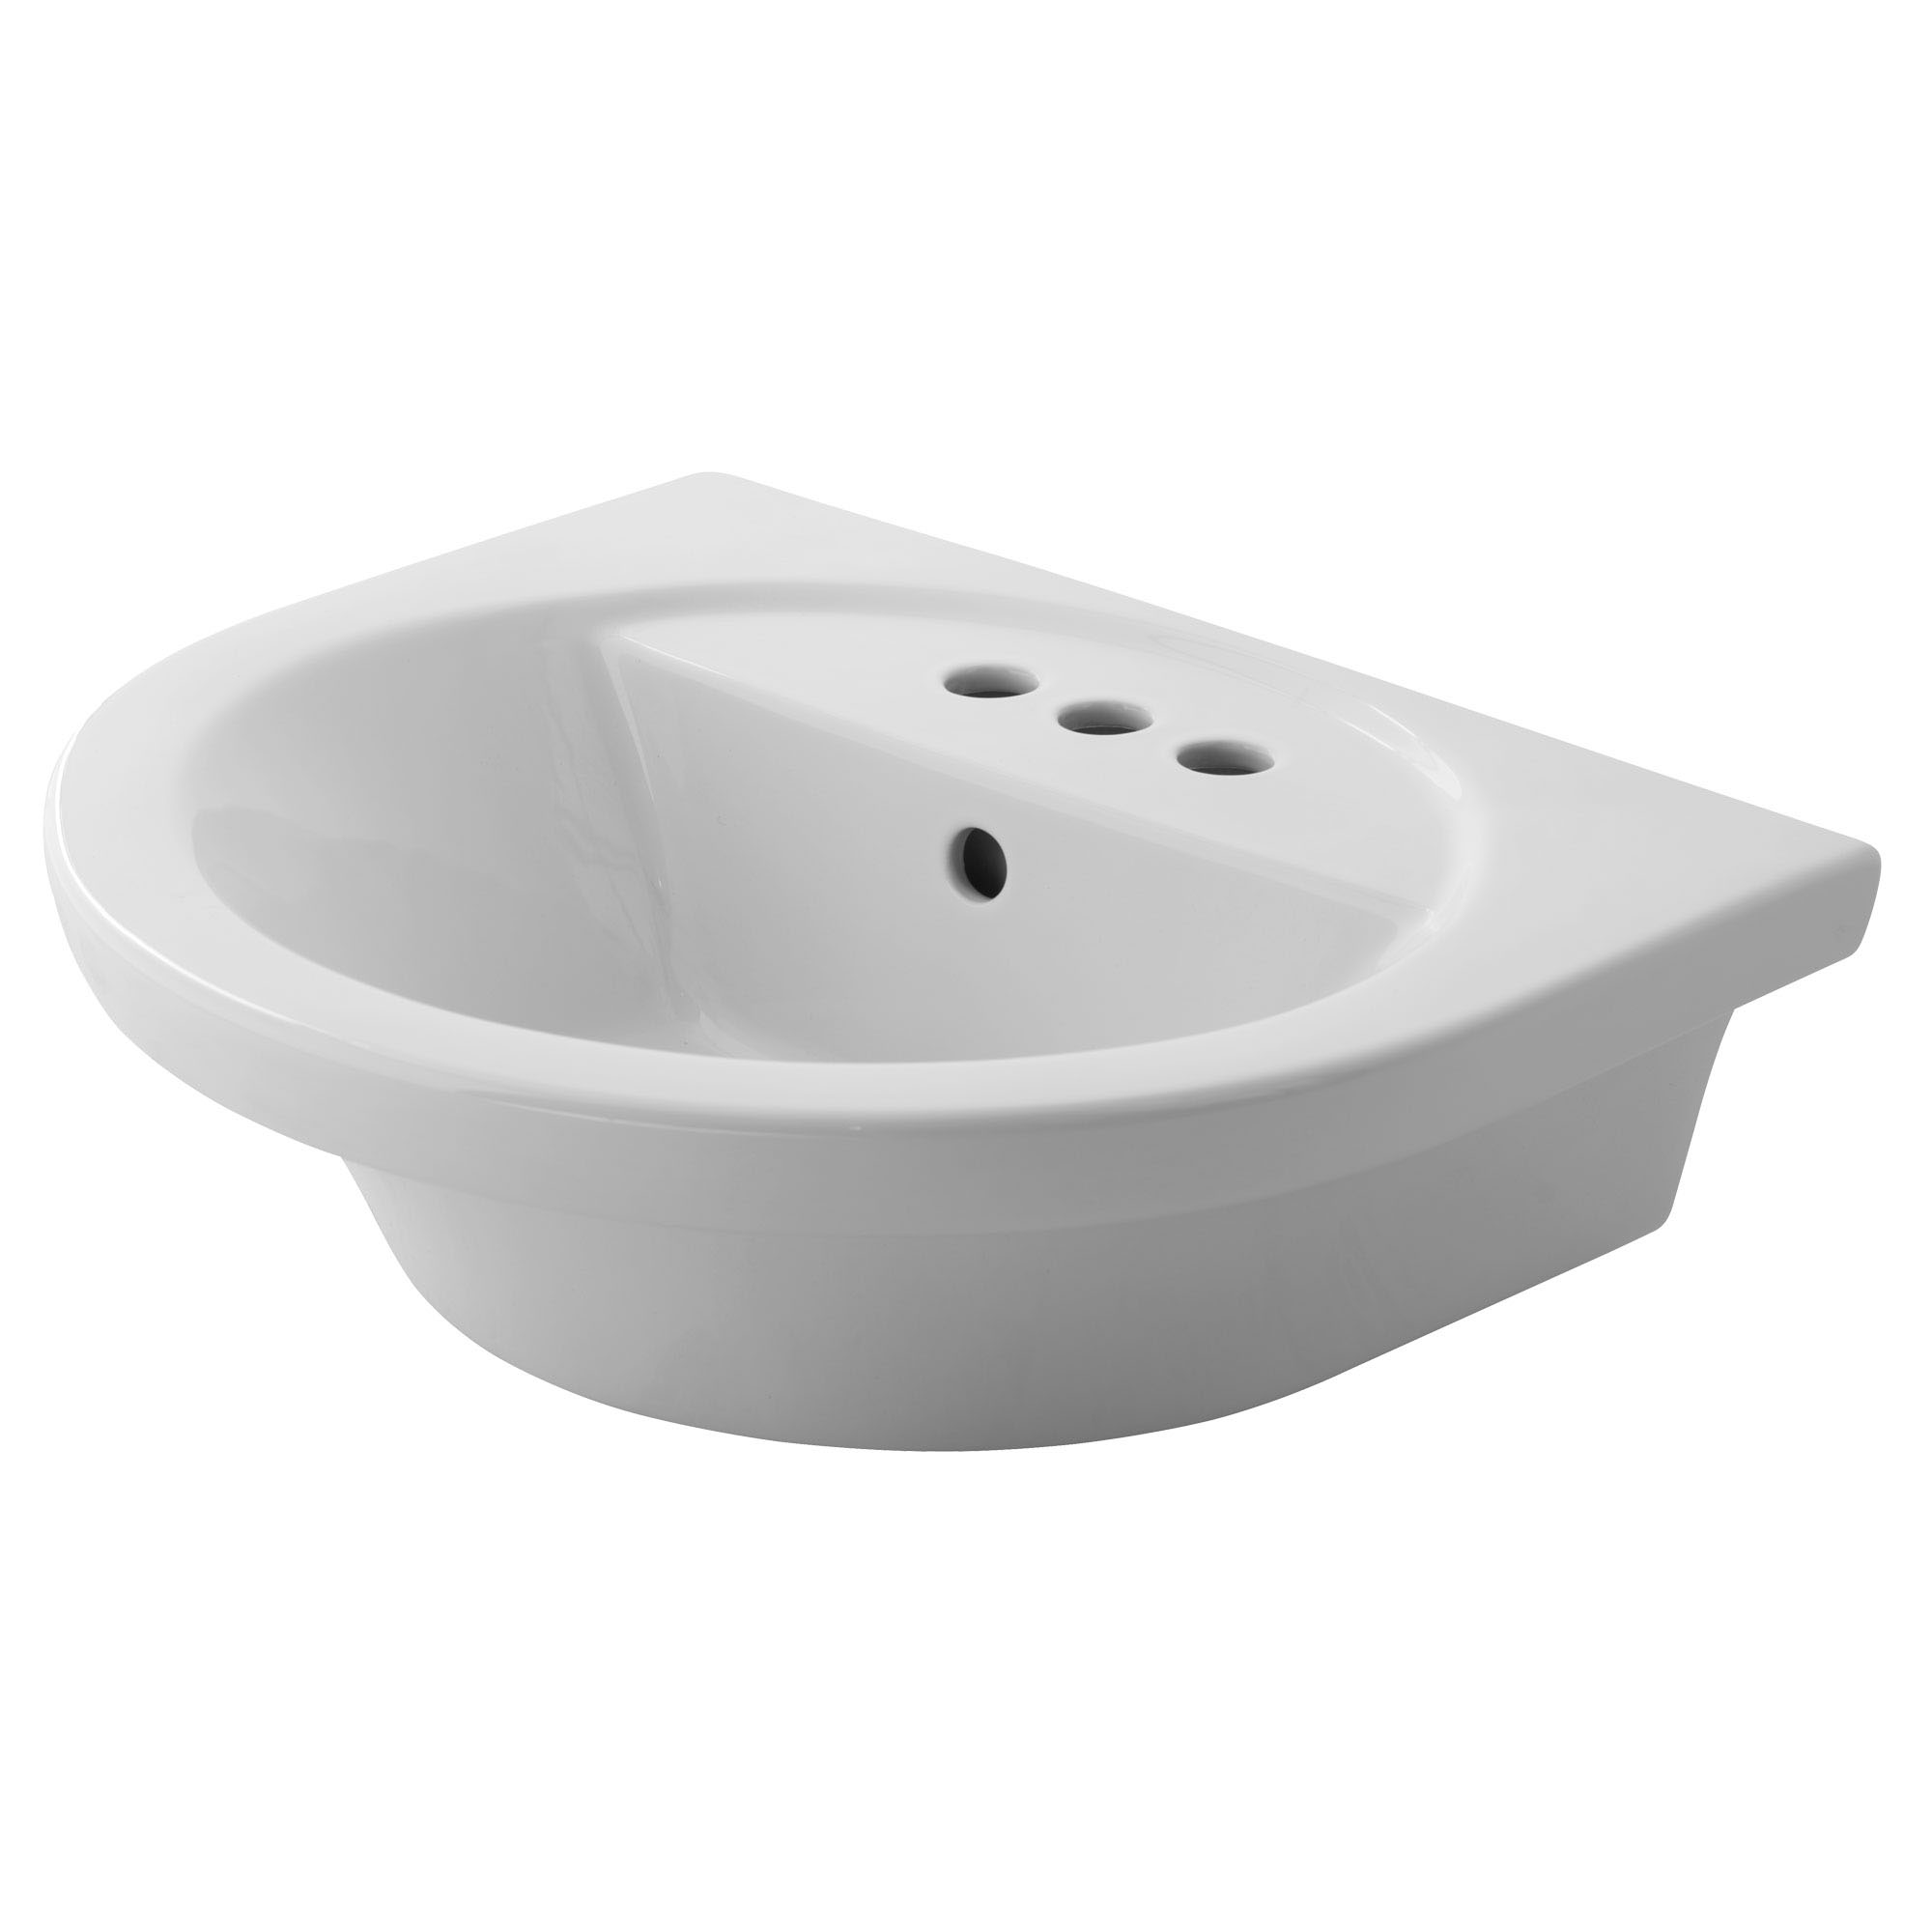 Tropic® Petite 4-Inch Centerset Pedestal Sink Top